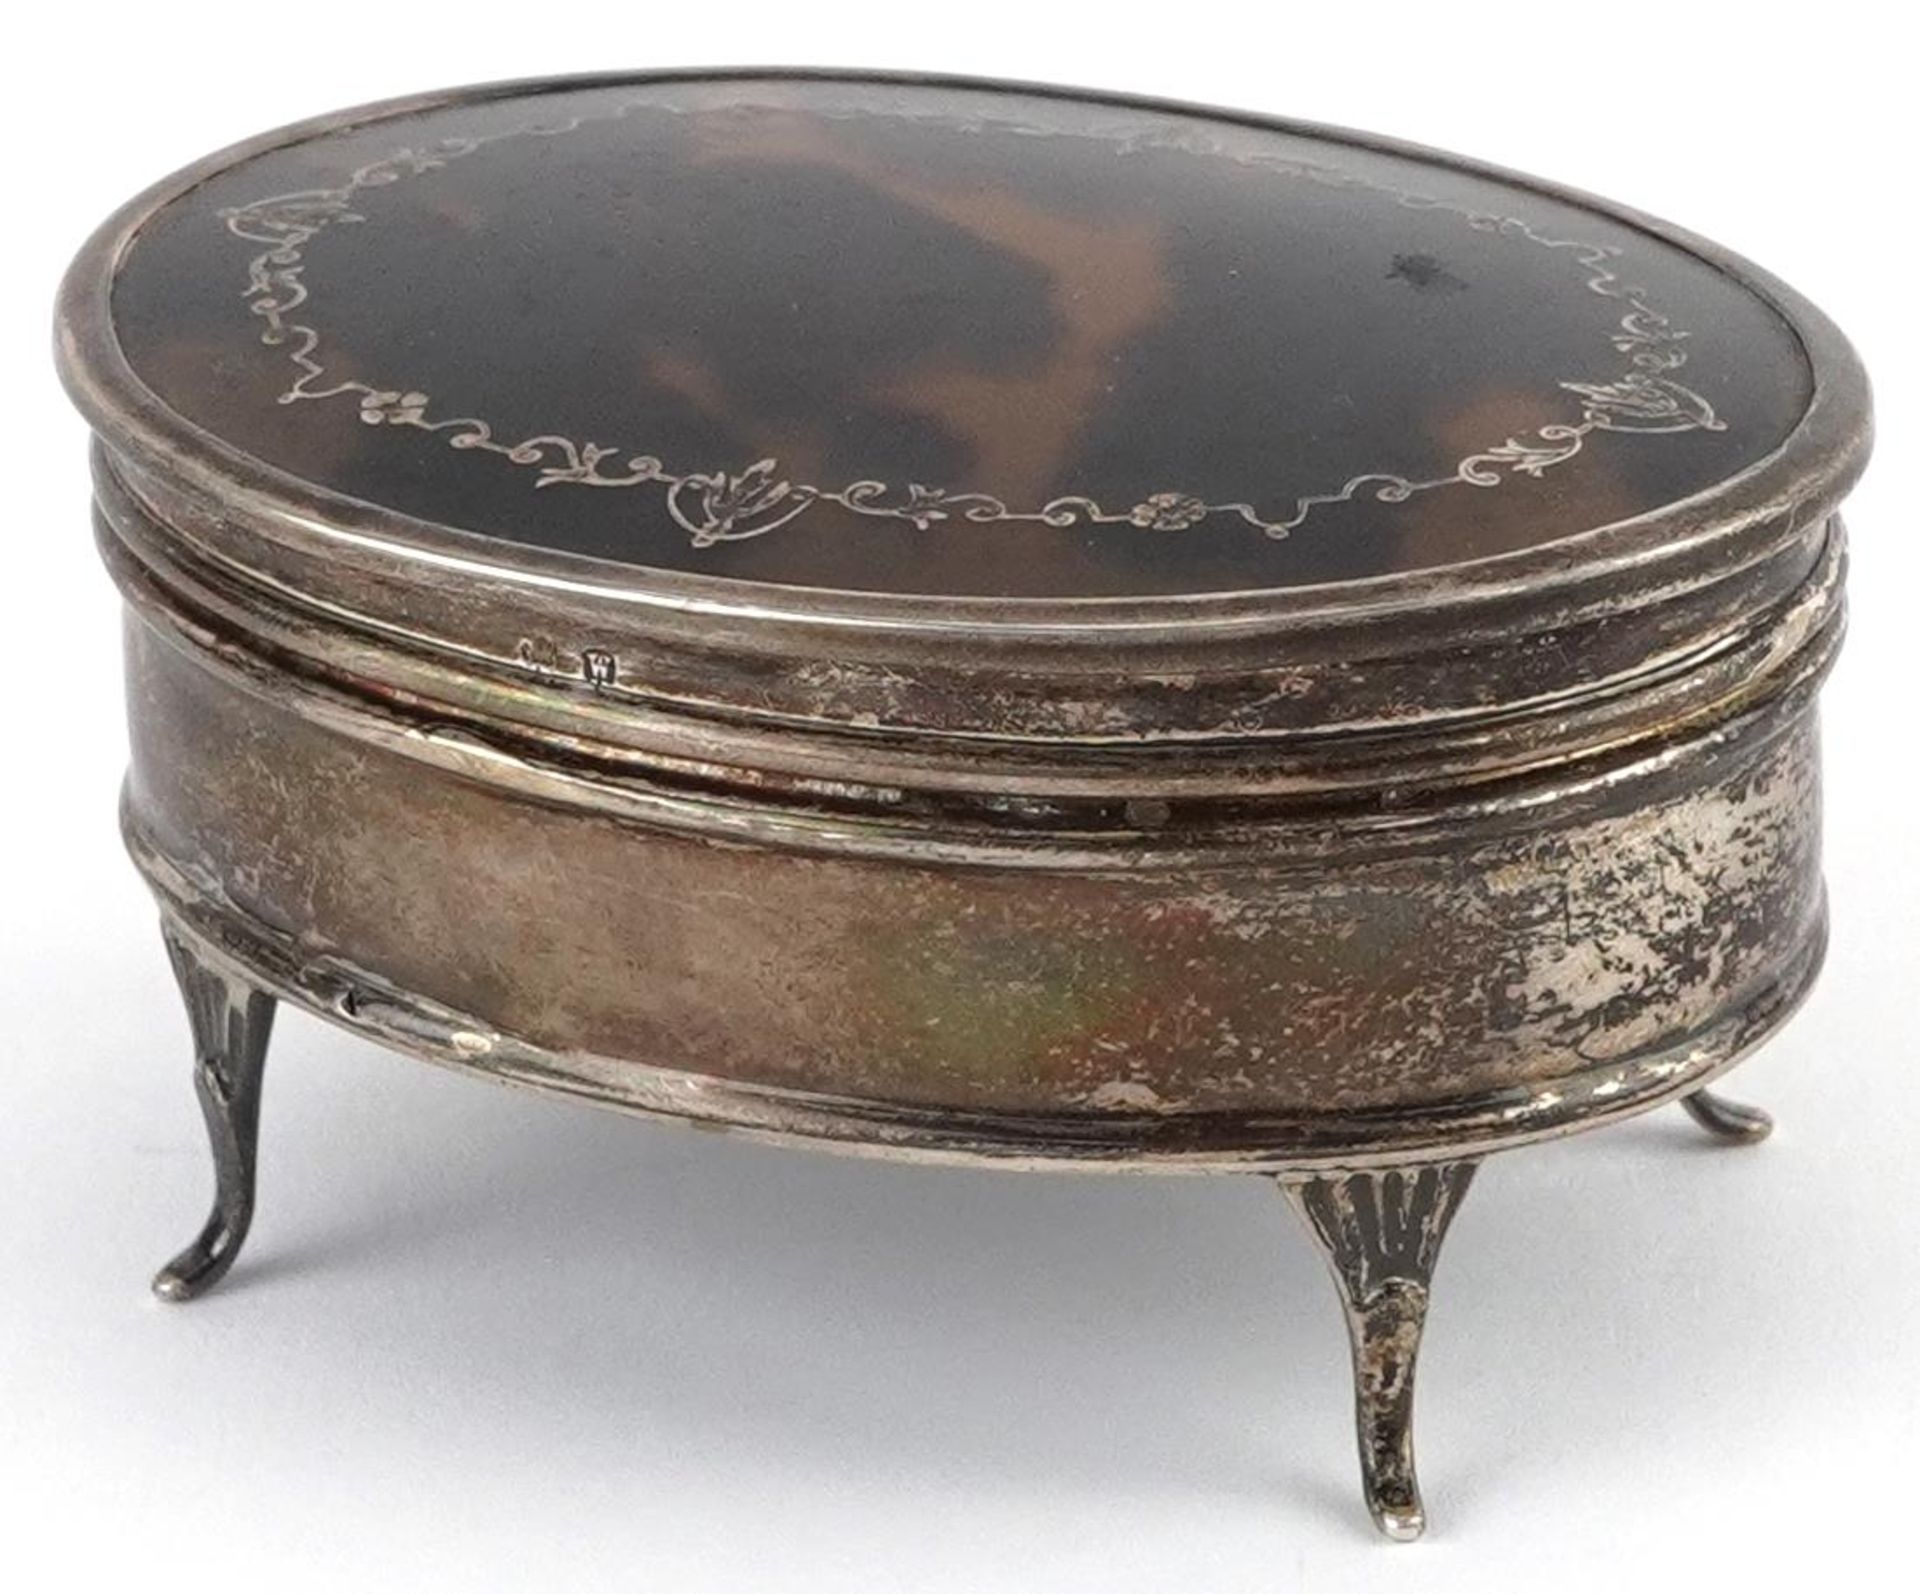 E S Barnsley & Co, George V silver and tortoiseshell pique work jewel box raised on four feet,